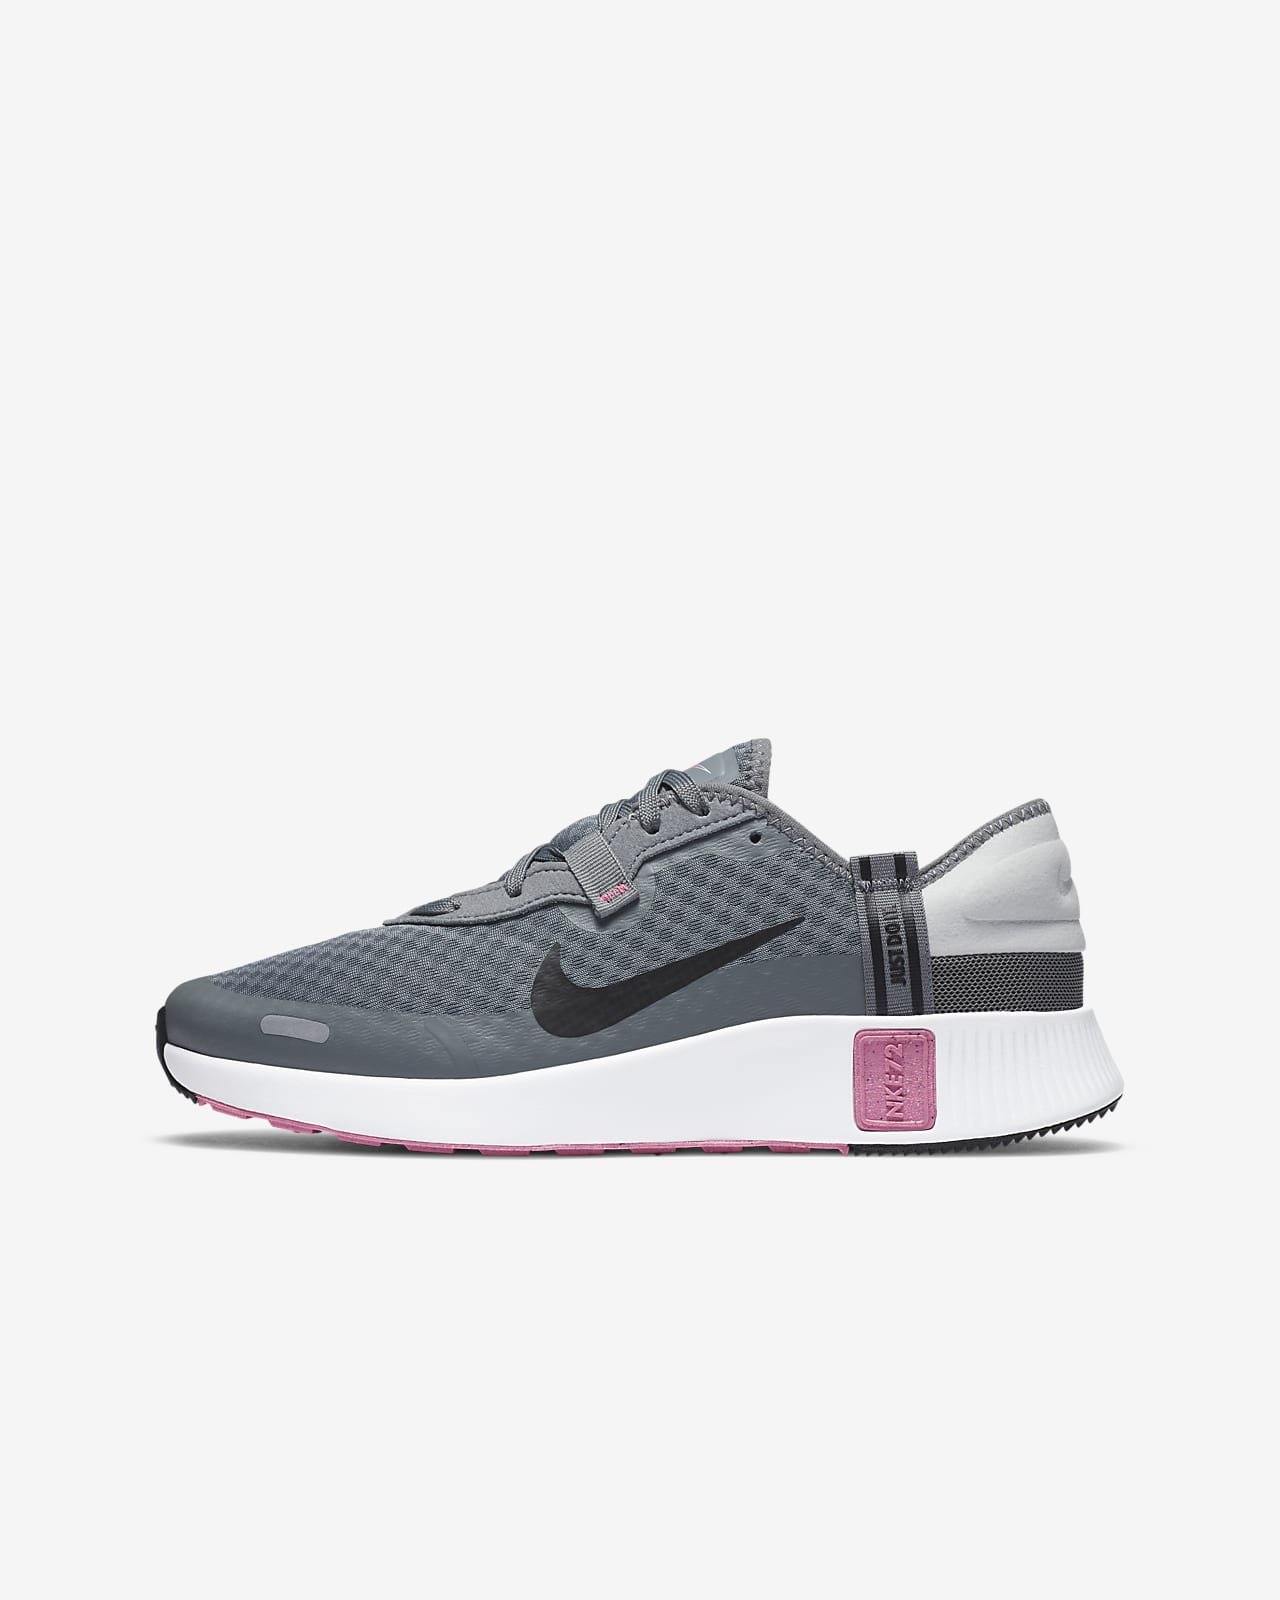 Nike Reposto Schuh für ältere Kinder